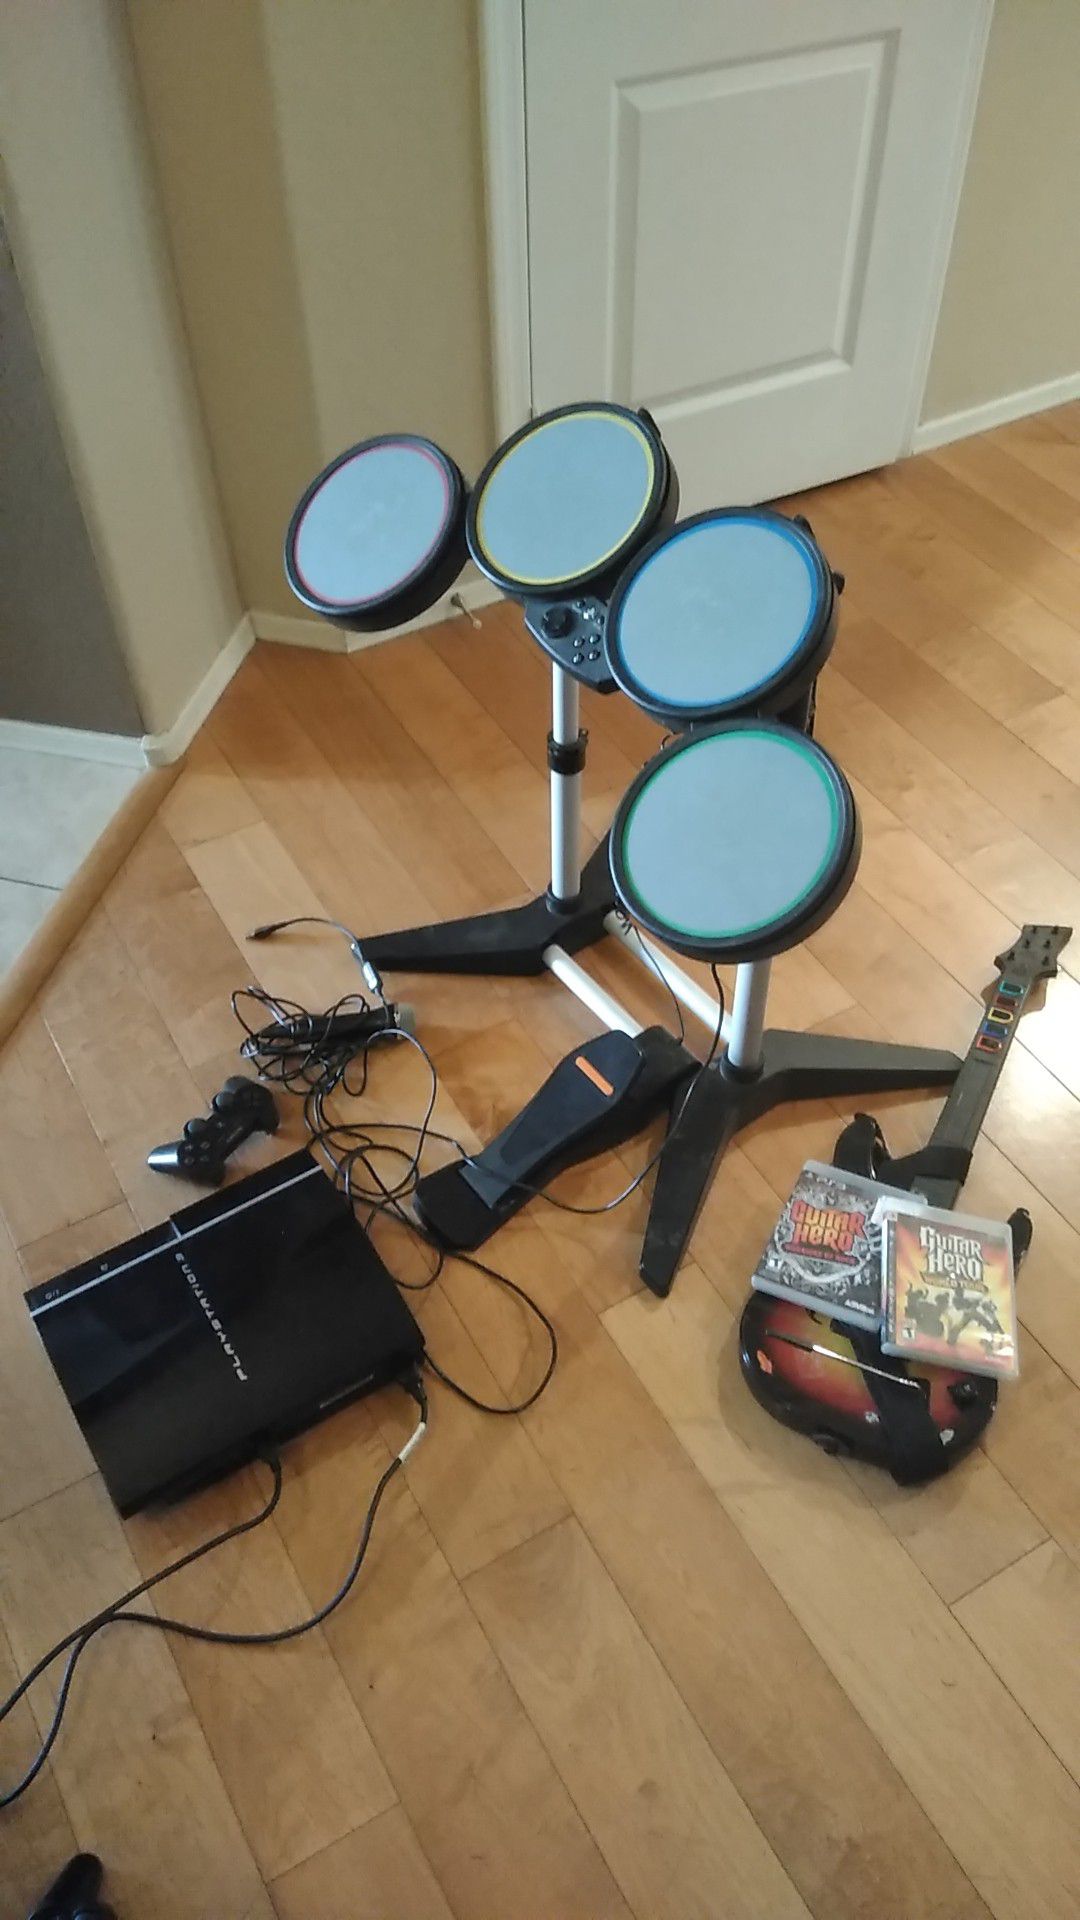 PS3 Drum set, system, guitar****please read****